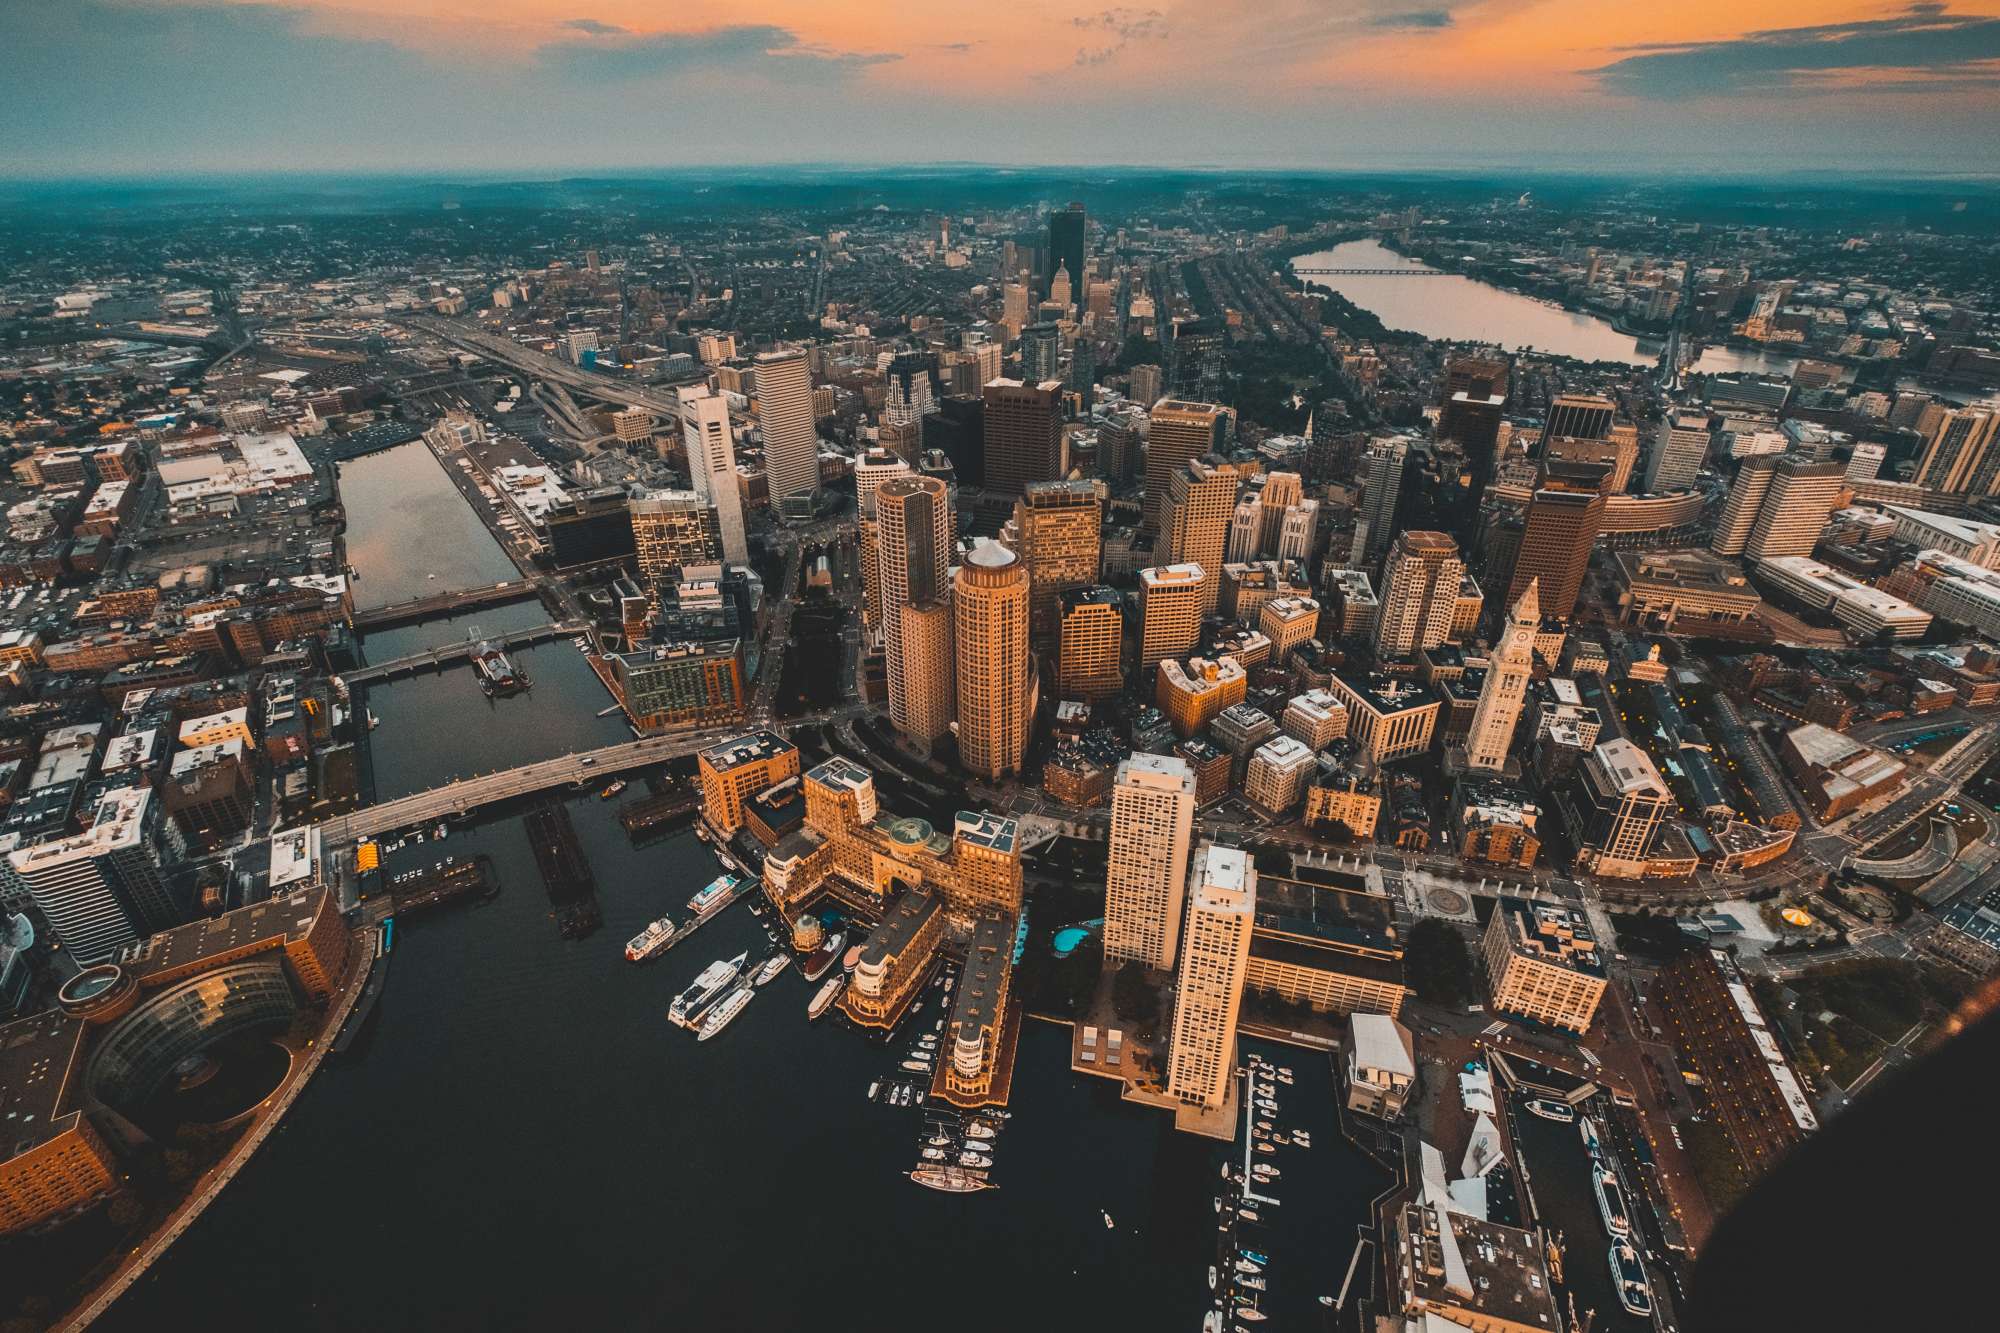 The city of Boston 